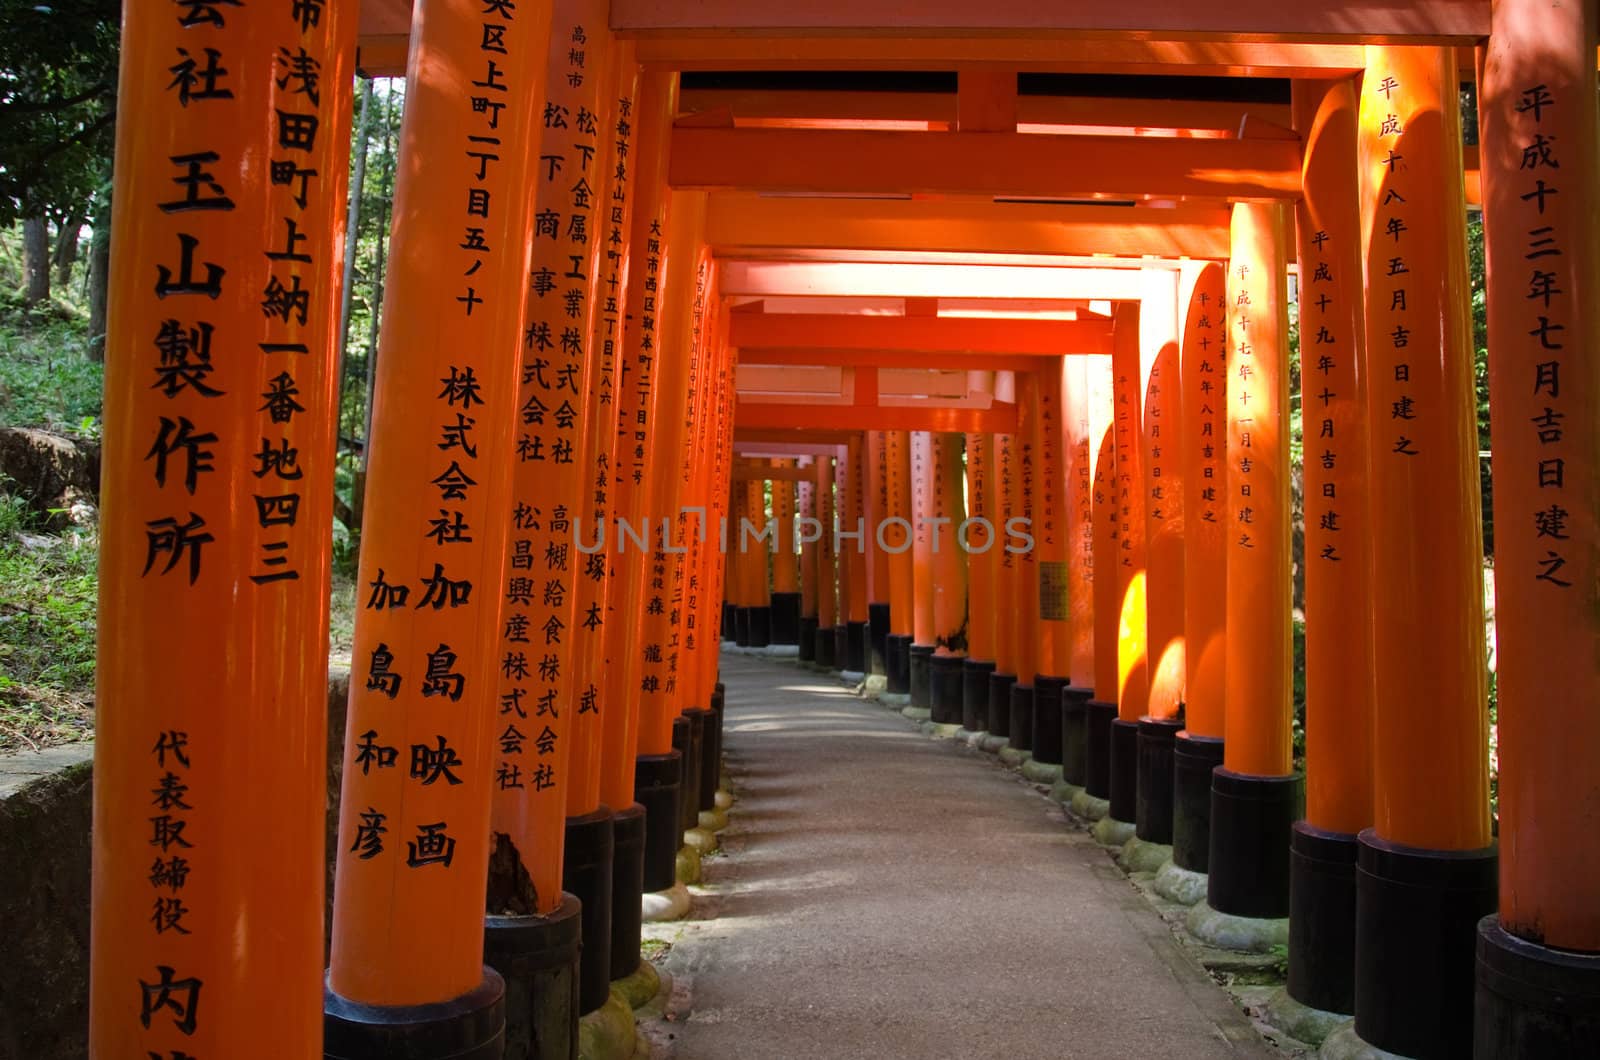 Torii gates at Inari shrine in Kyoto by Arrxxx